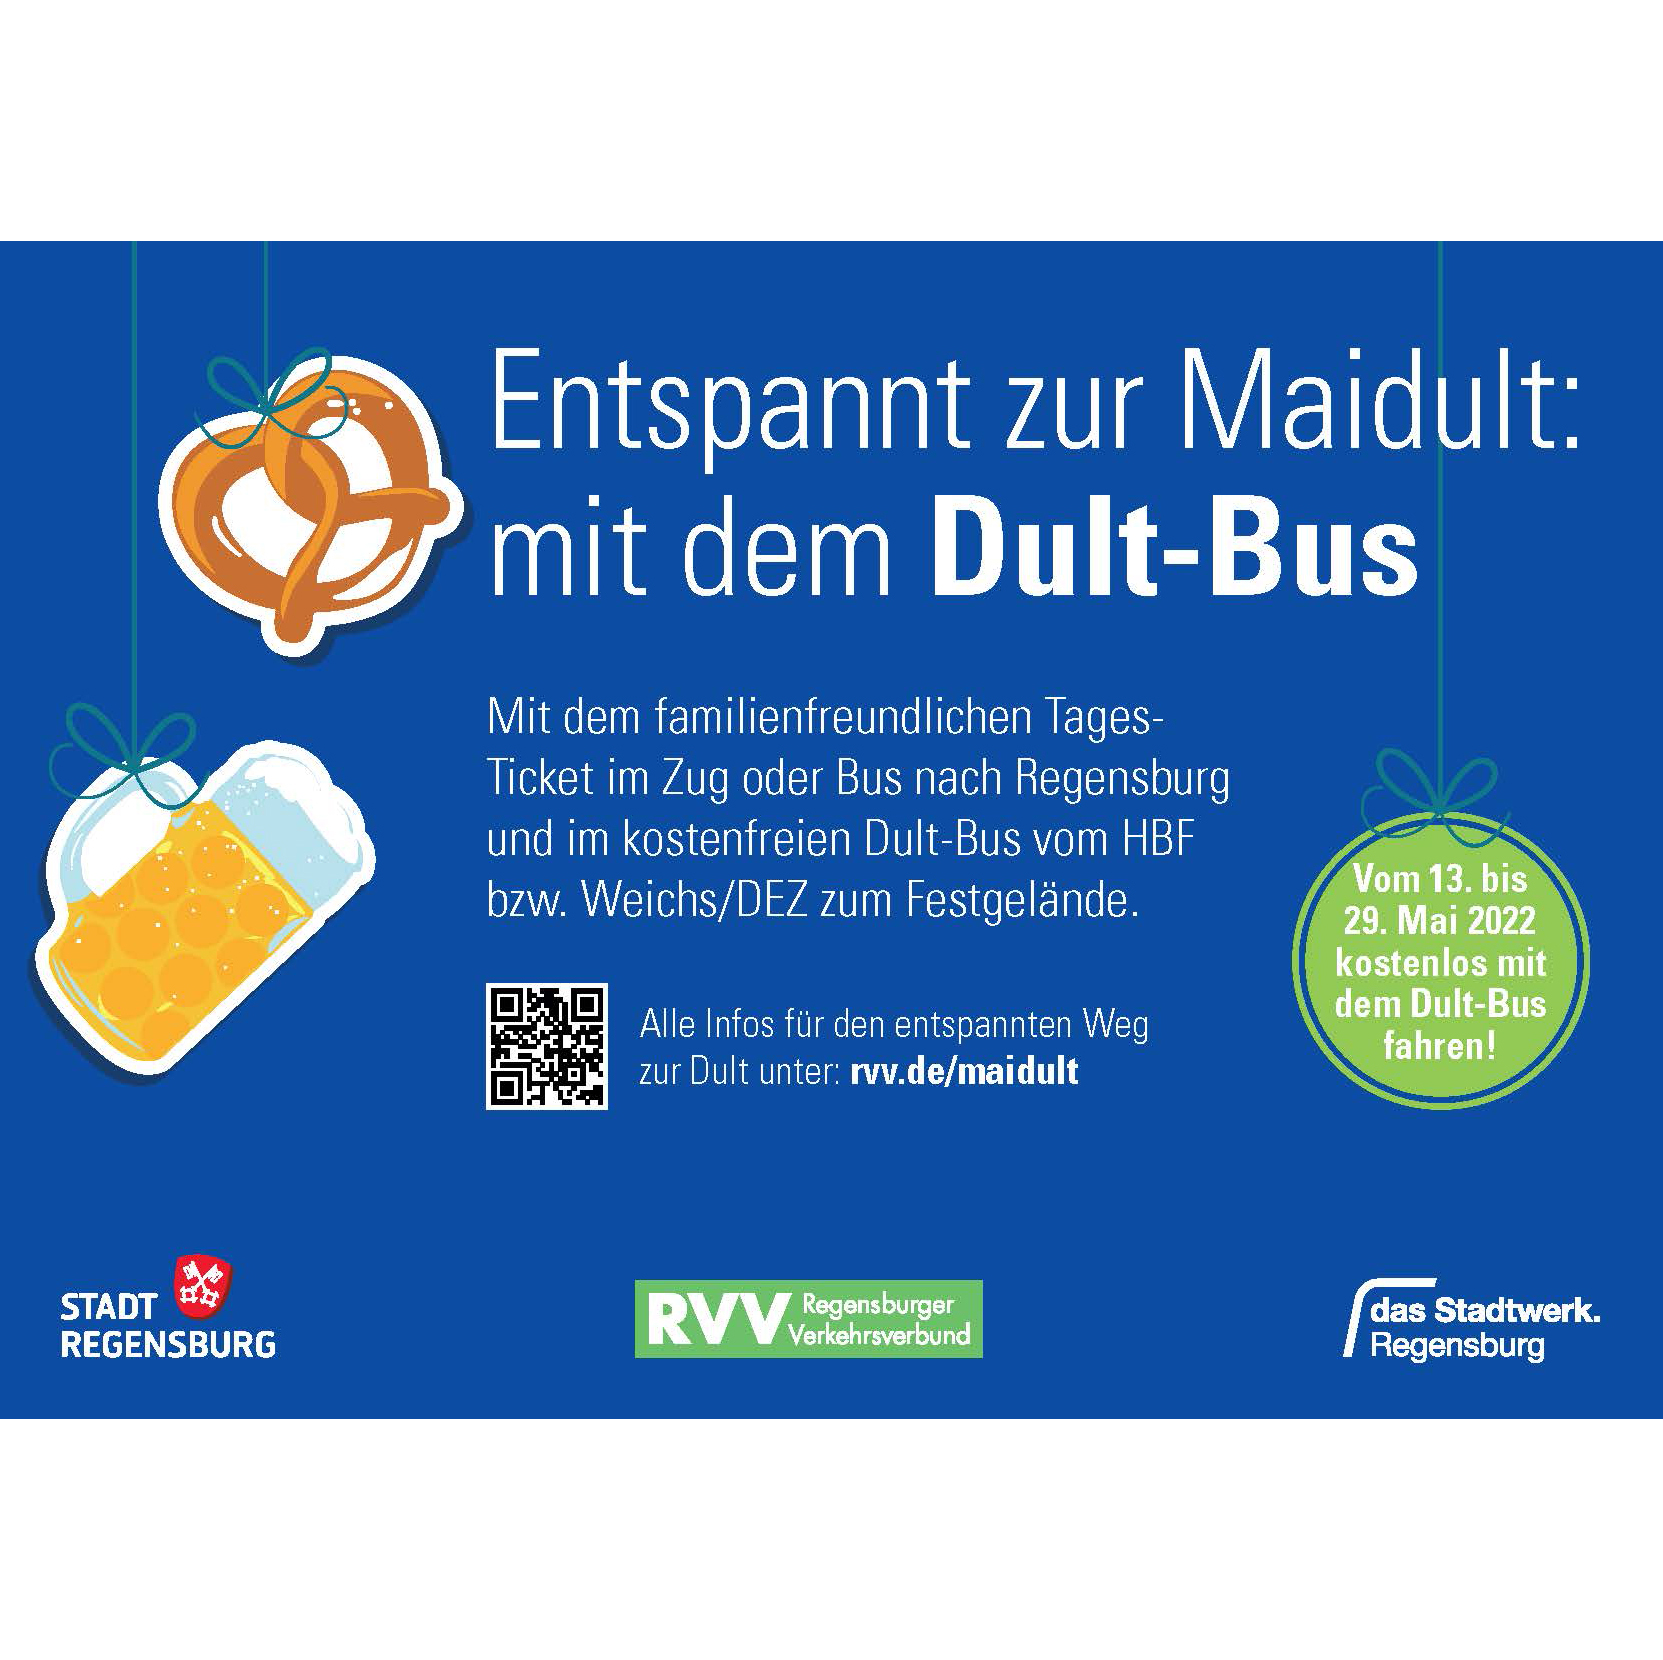 Kostenfreier Dult-Bus